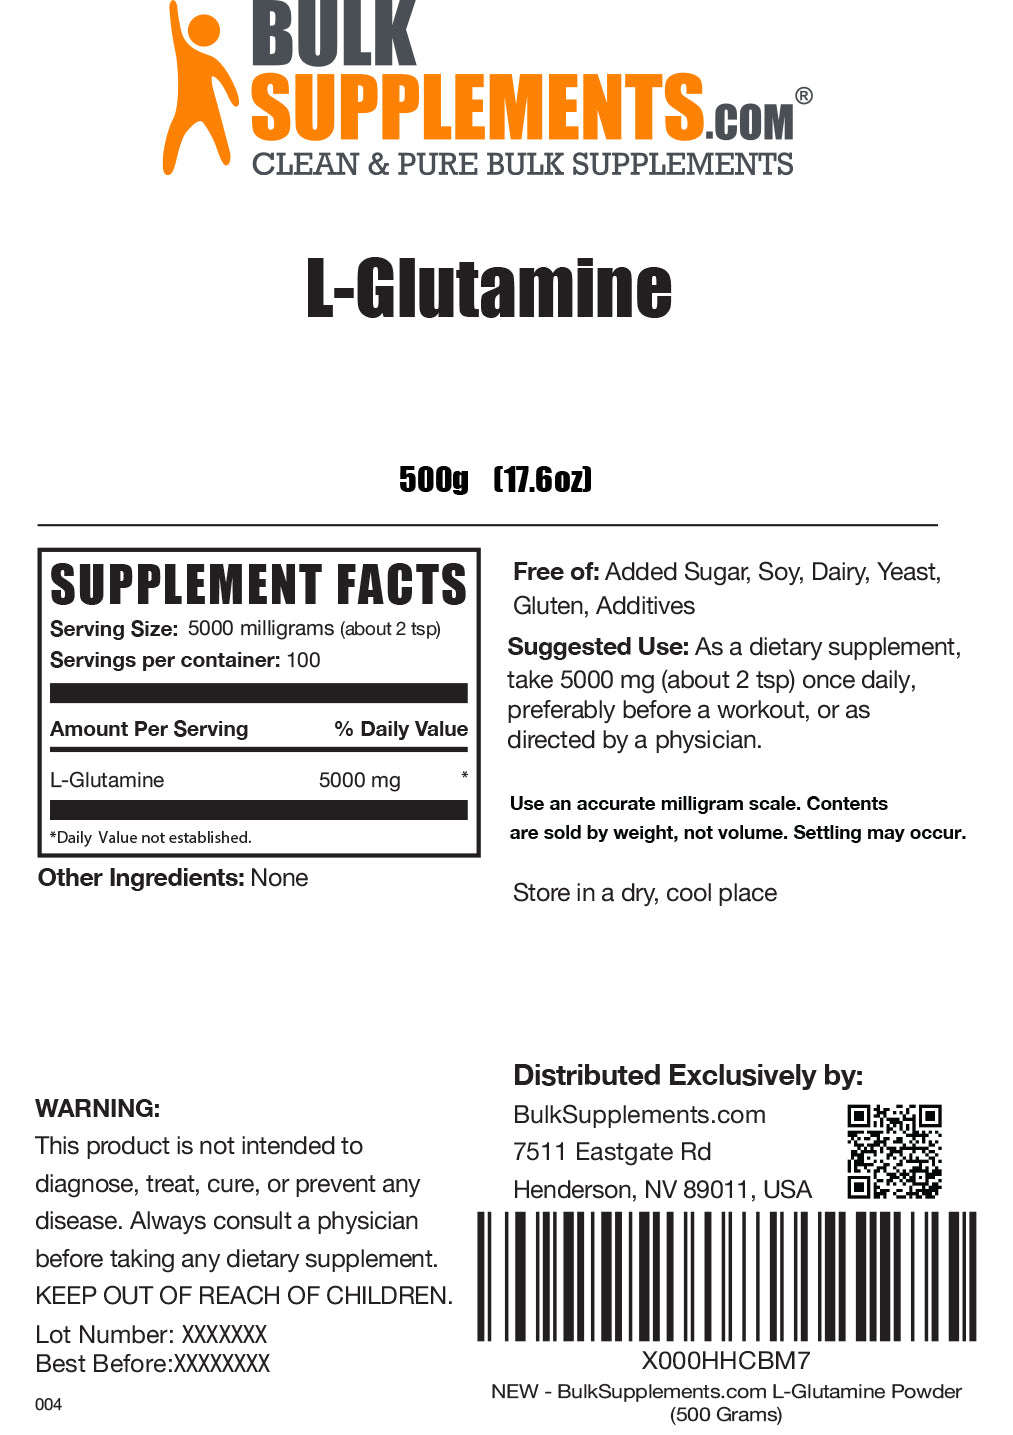 L-Glutamine Label 500g